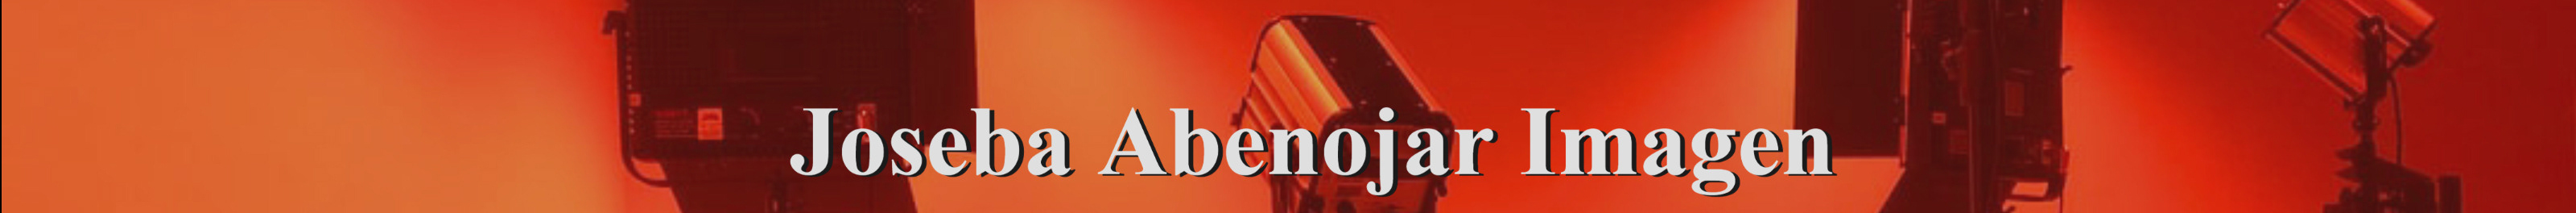 Joseba Abenojar's profile banner